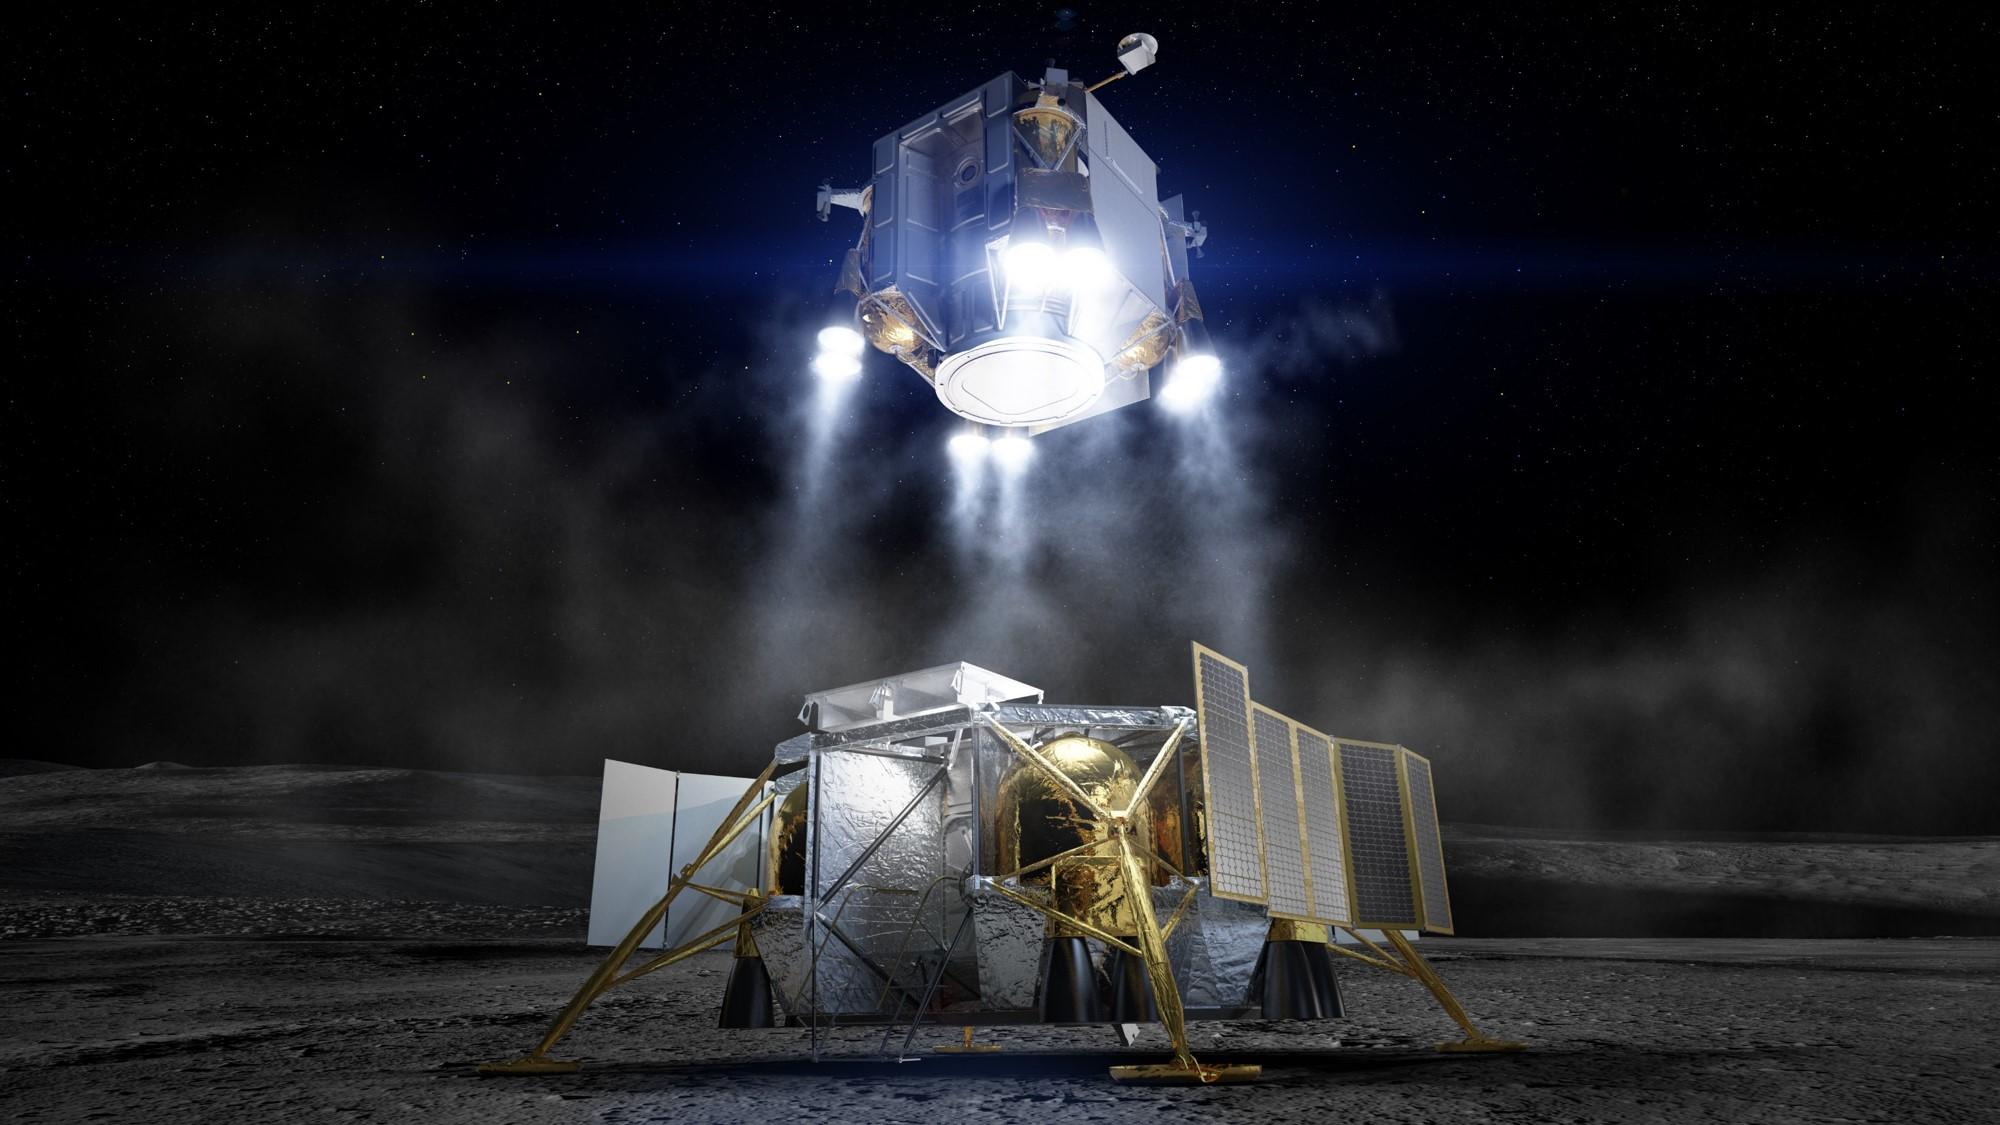 LEGO IDEAS - NASA's SLS Block 1 & 1B Rockets - Artemis Missions